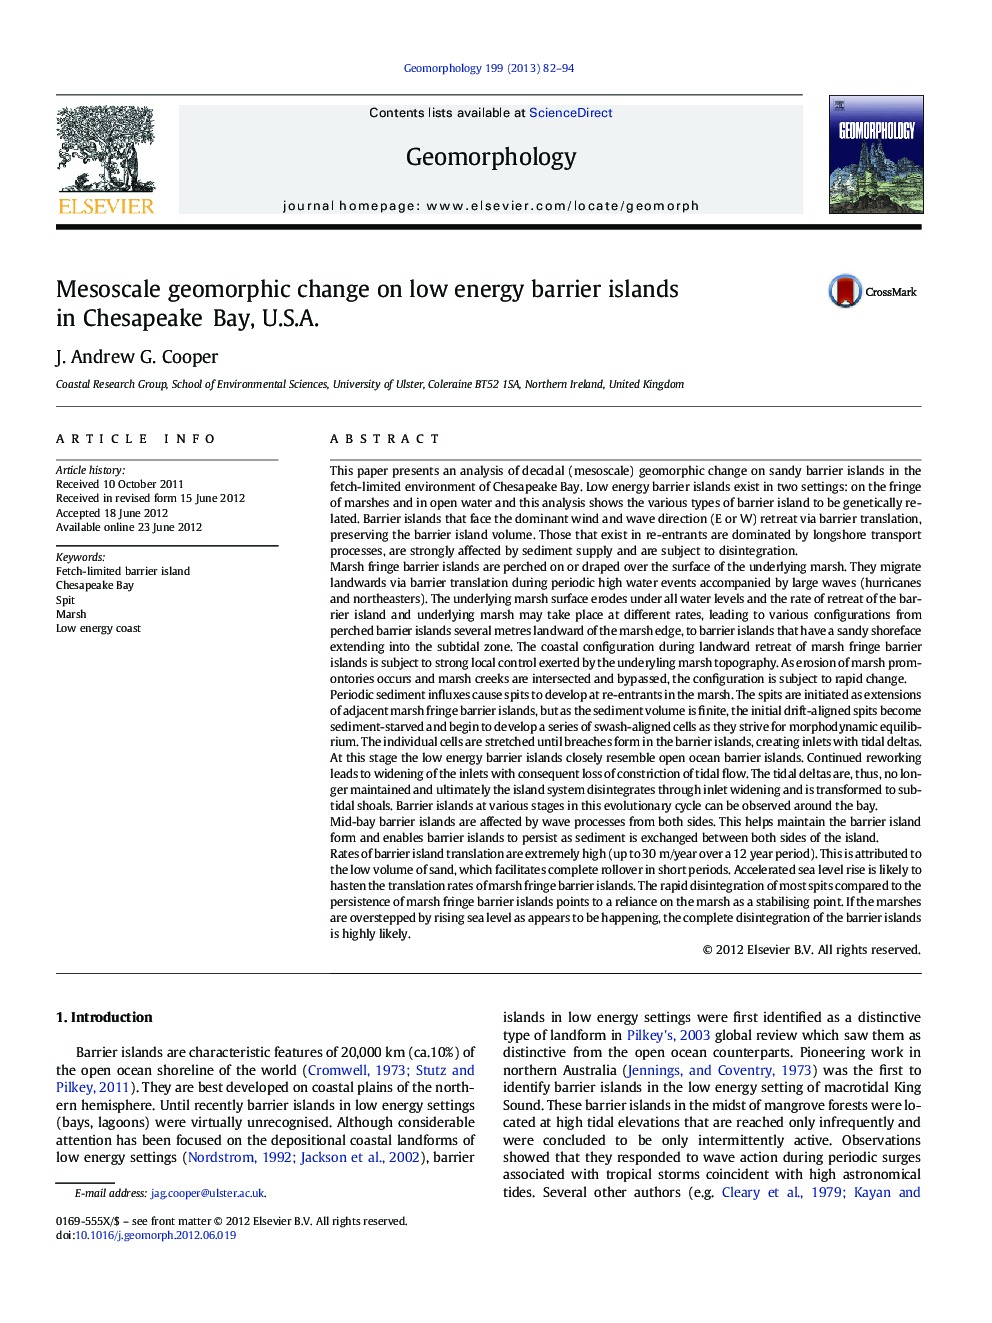 Mesoscale geomorphic change on low energy barrier islands in Chesapeake Bay, U.S.A.